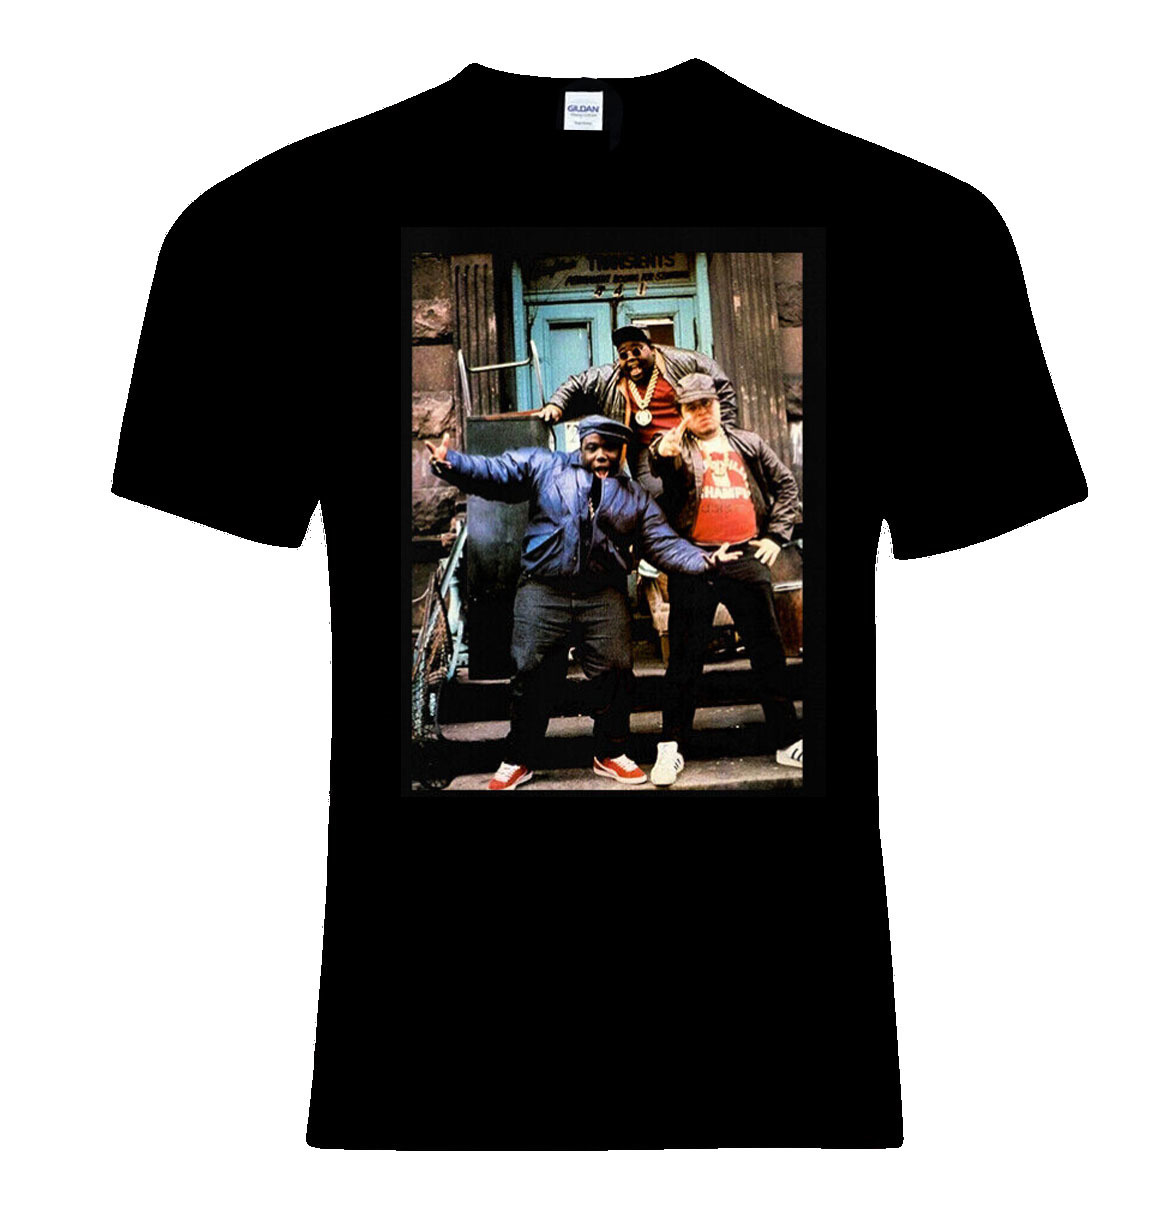 Primary image for The Fat Boys Hip hop trio Black T-shirt